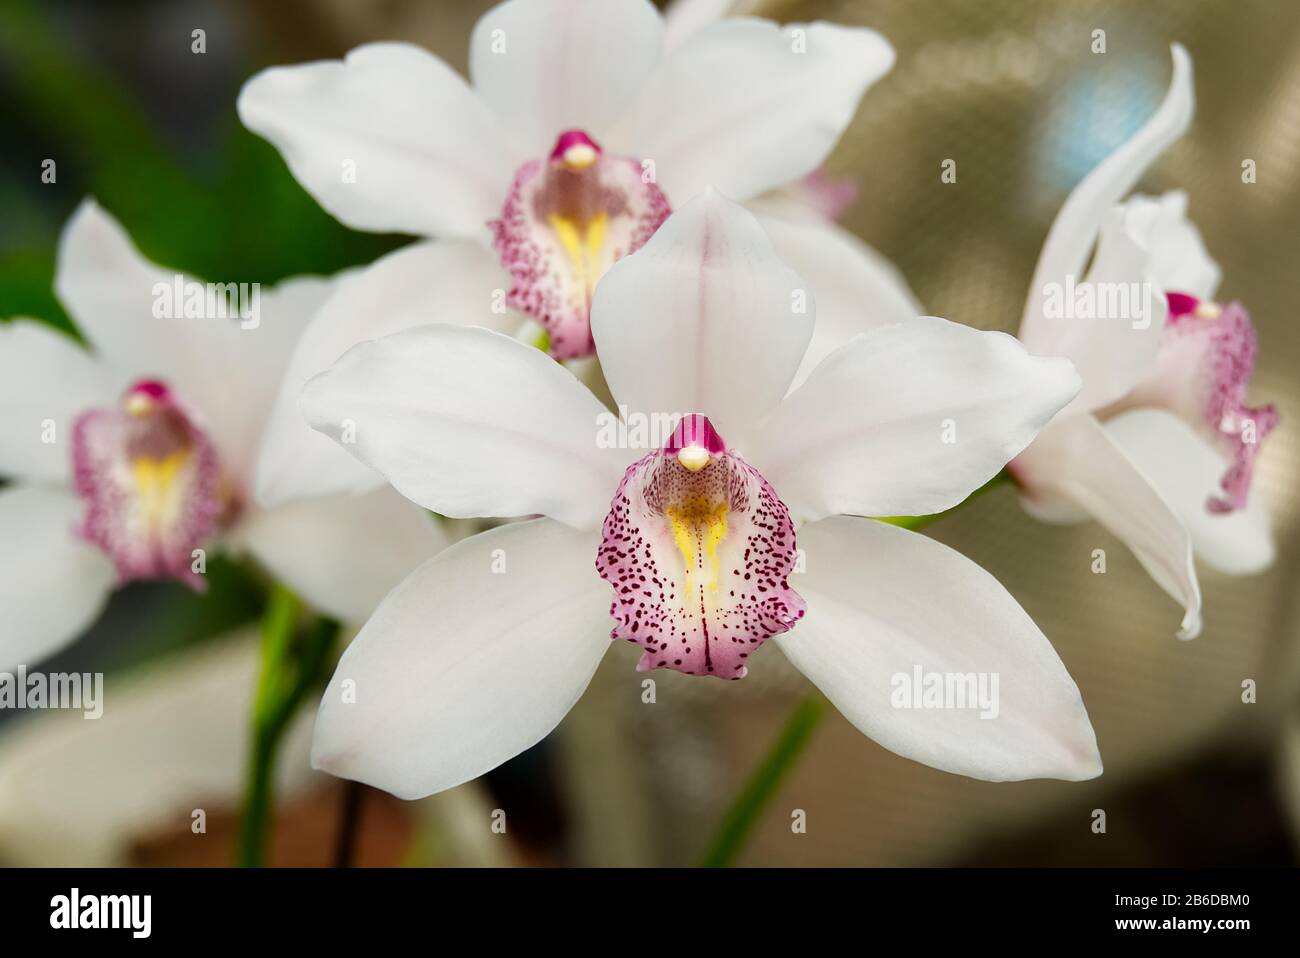 Cattleya labiata, conosciuta anche come la tortleya cremisi o la tortleya strappata dal rubino, è la specie tipo di Cattleya. Orchidee Cattleya Foto Stock